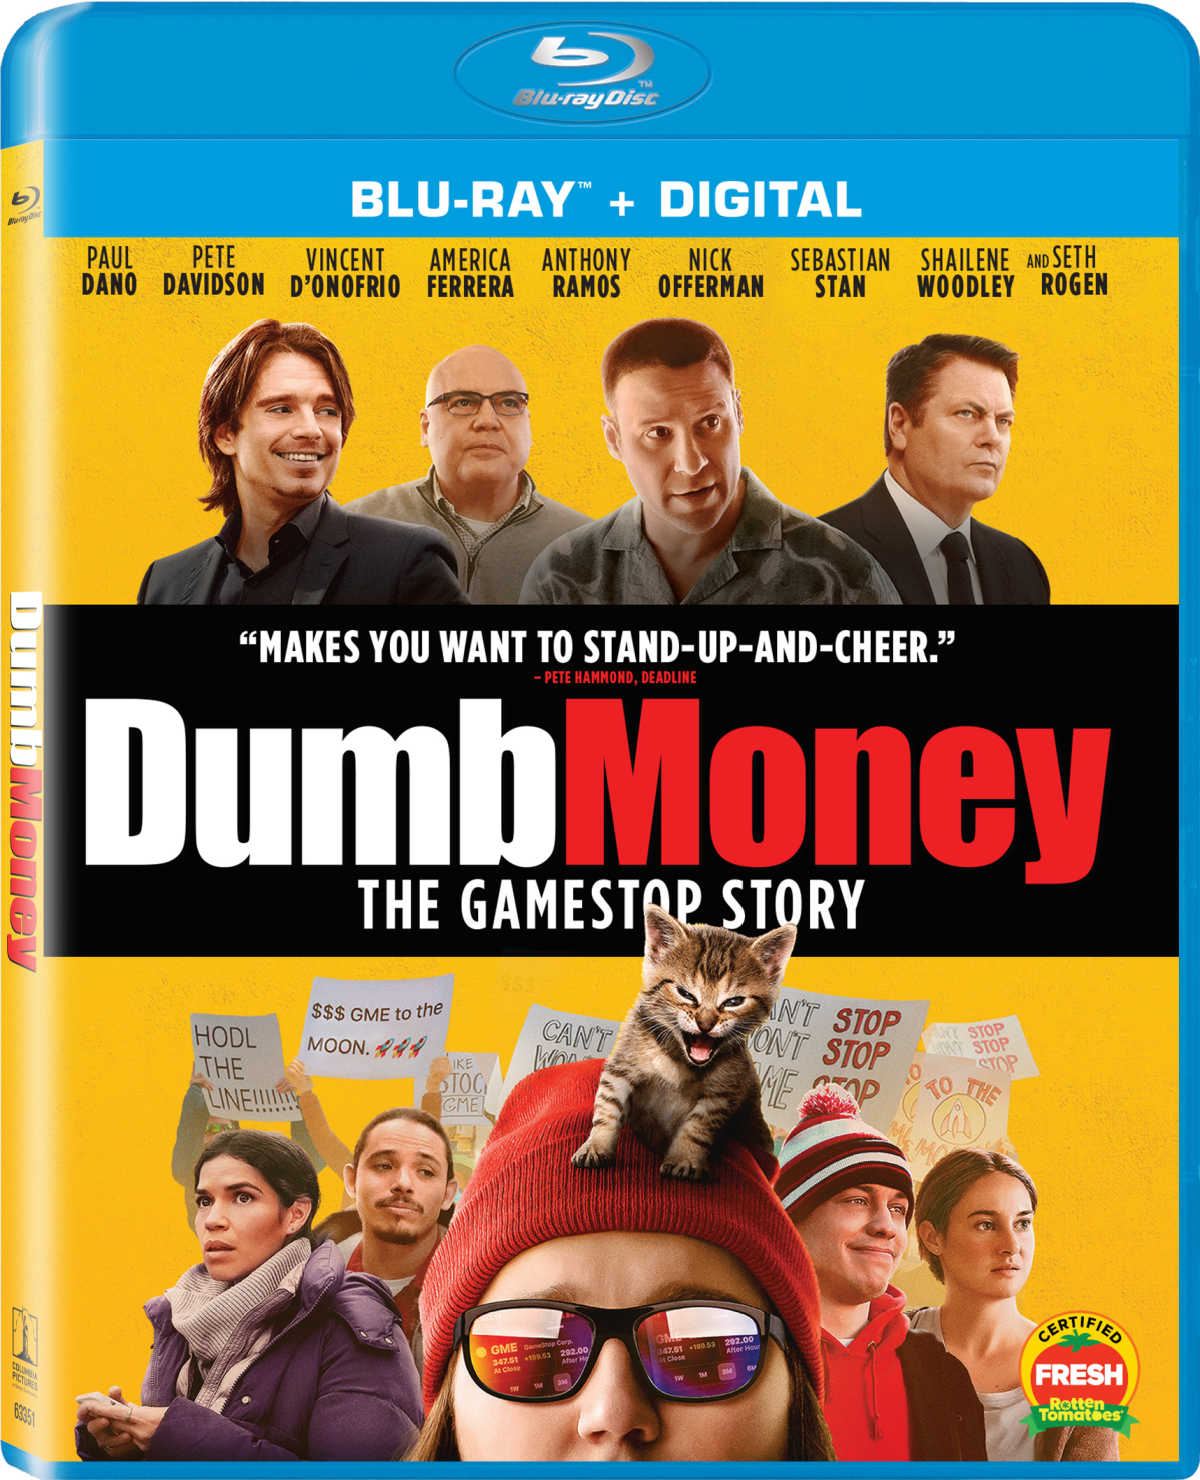 blu-ray dumb money gamestop movie